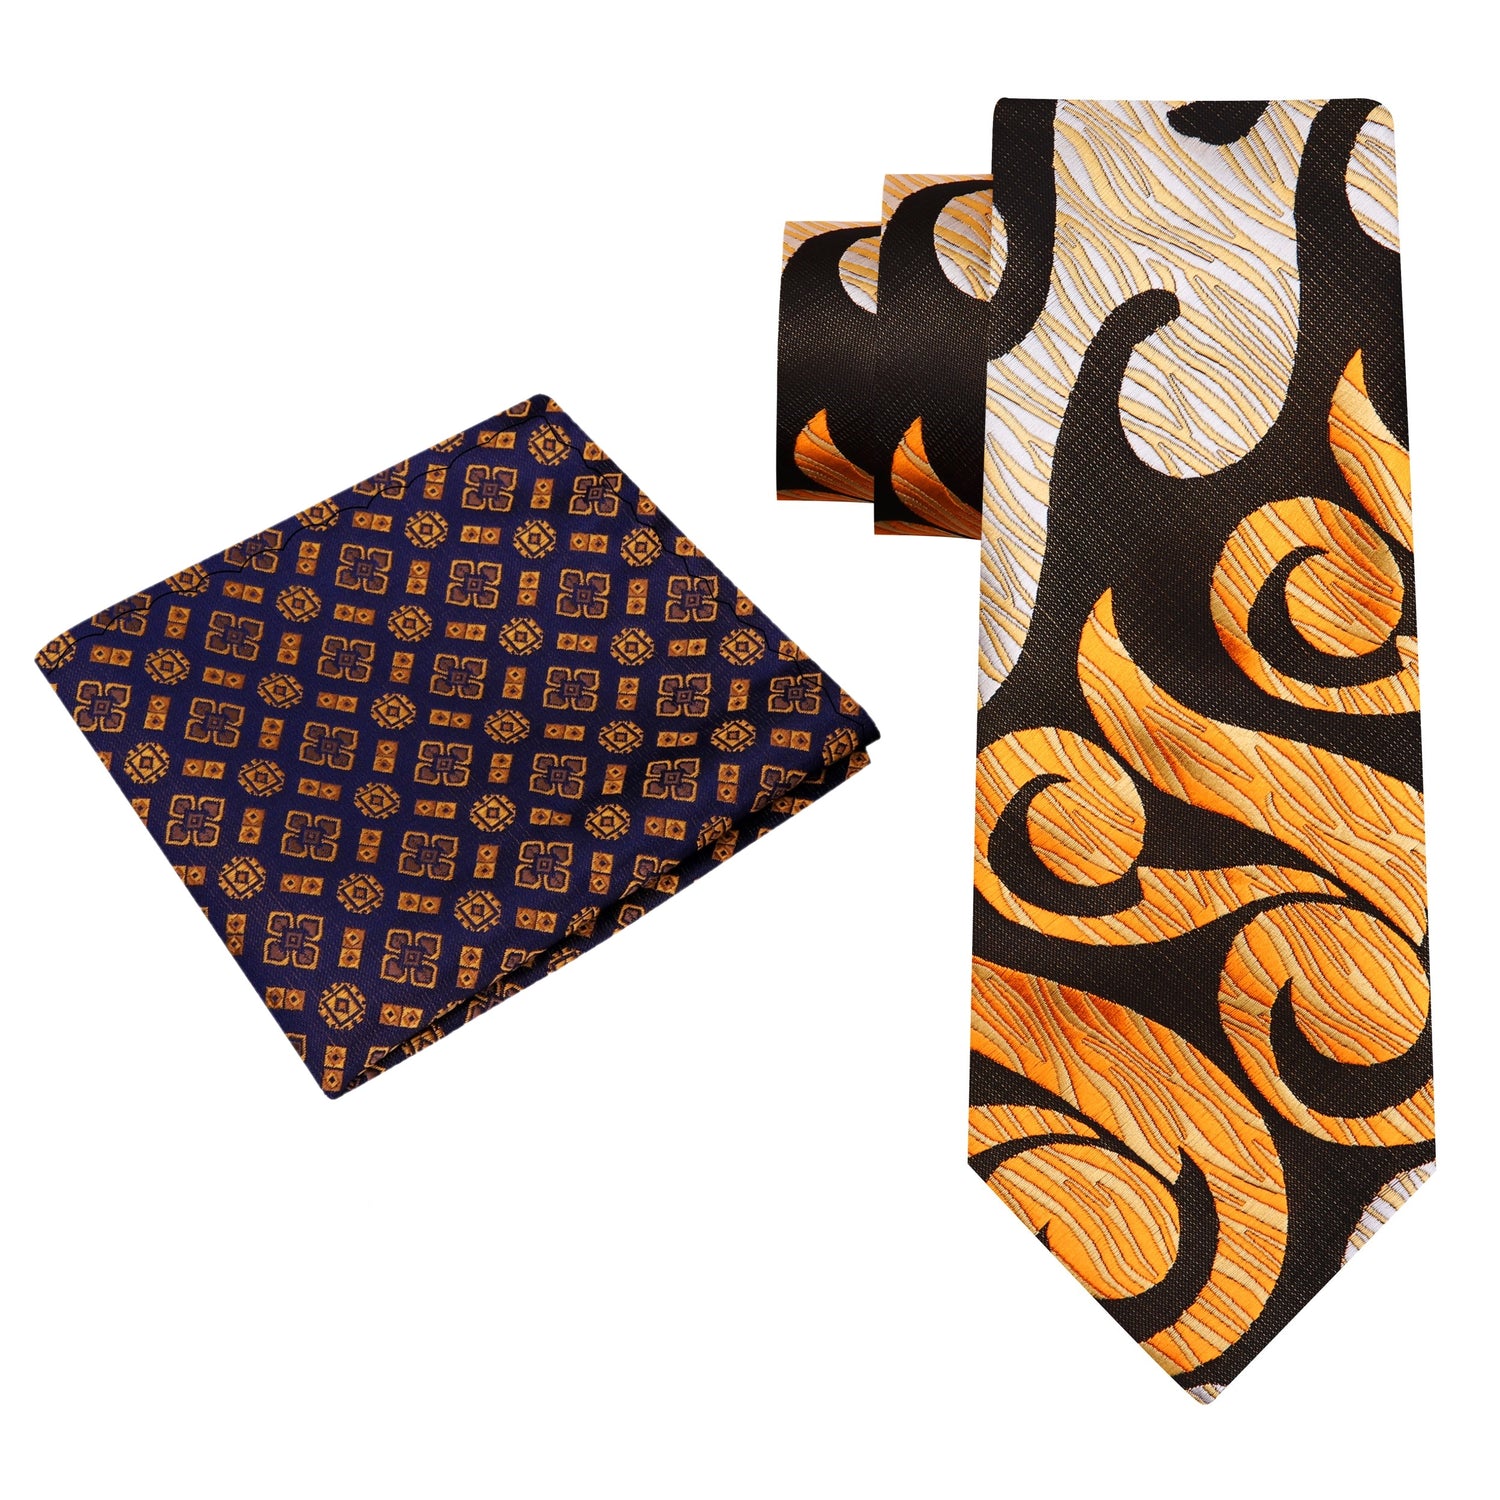 Alt View: A Tan, Dark Brown, Gold Abstract Swirl Pattern Silk Necktie, Accenting Pocket Square